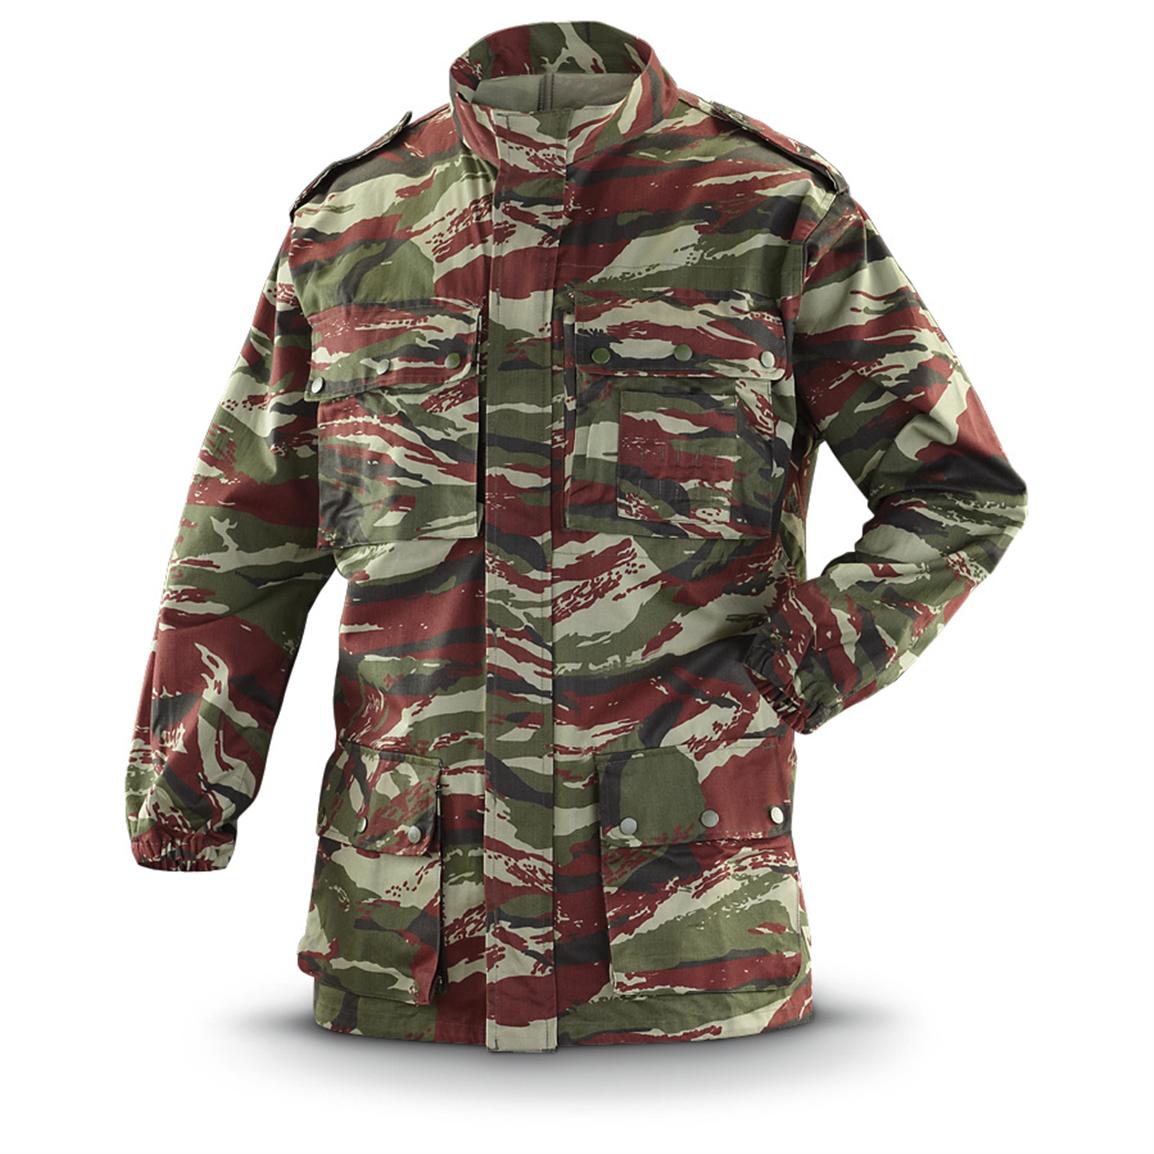 military-surplus-bdu-lizard-camo-jacket-operator-grade-new-421670